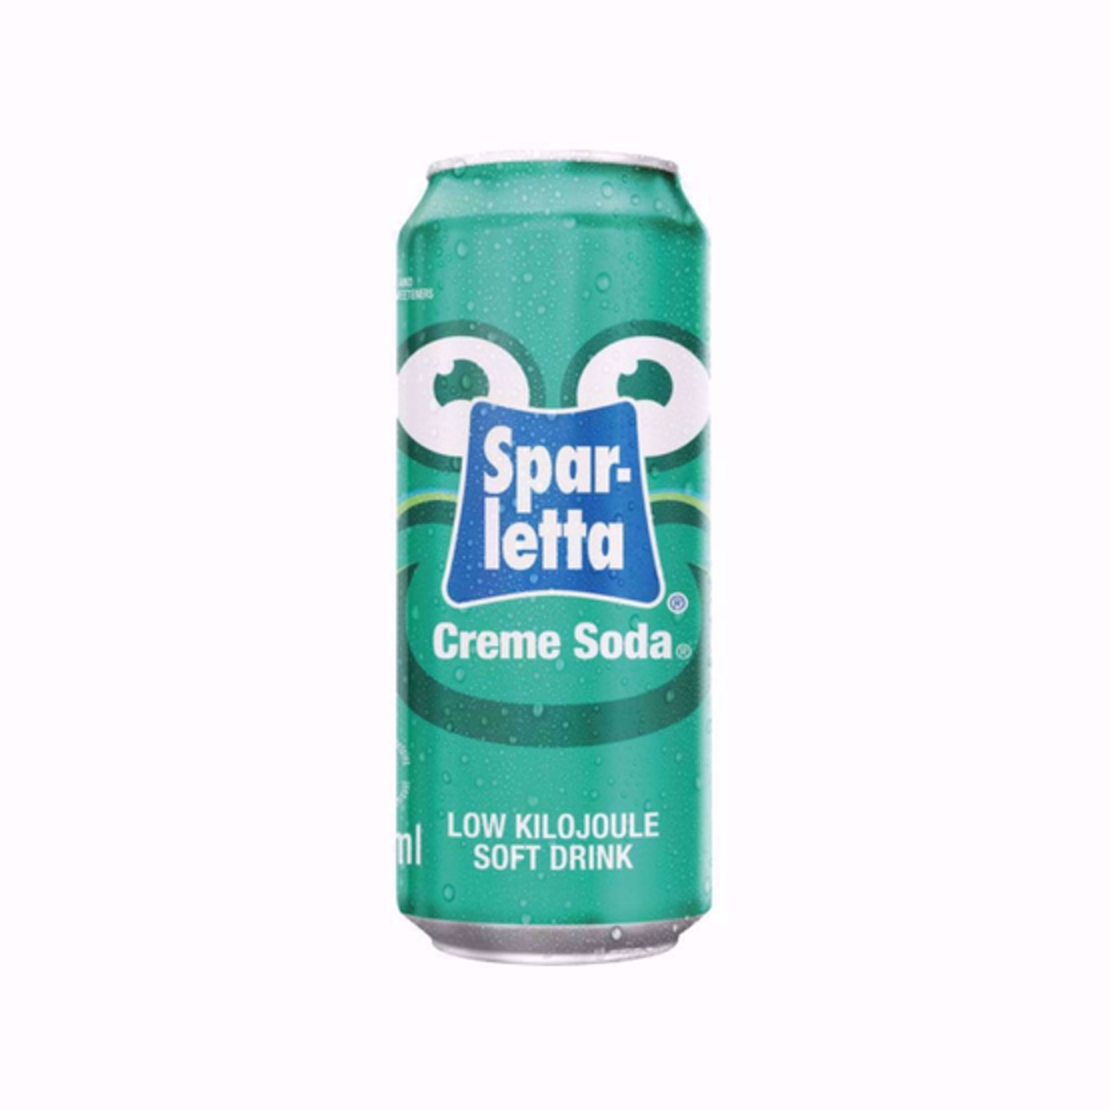 Sparletta Creme Soda 300 ml - Clearance